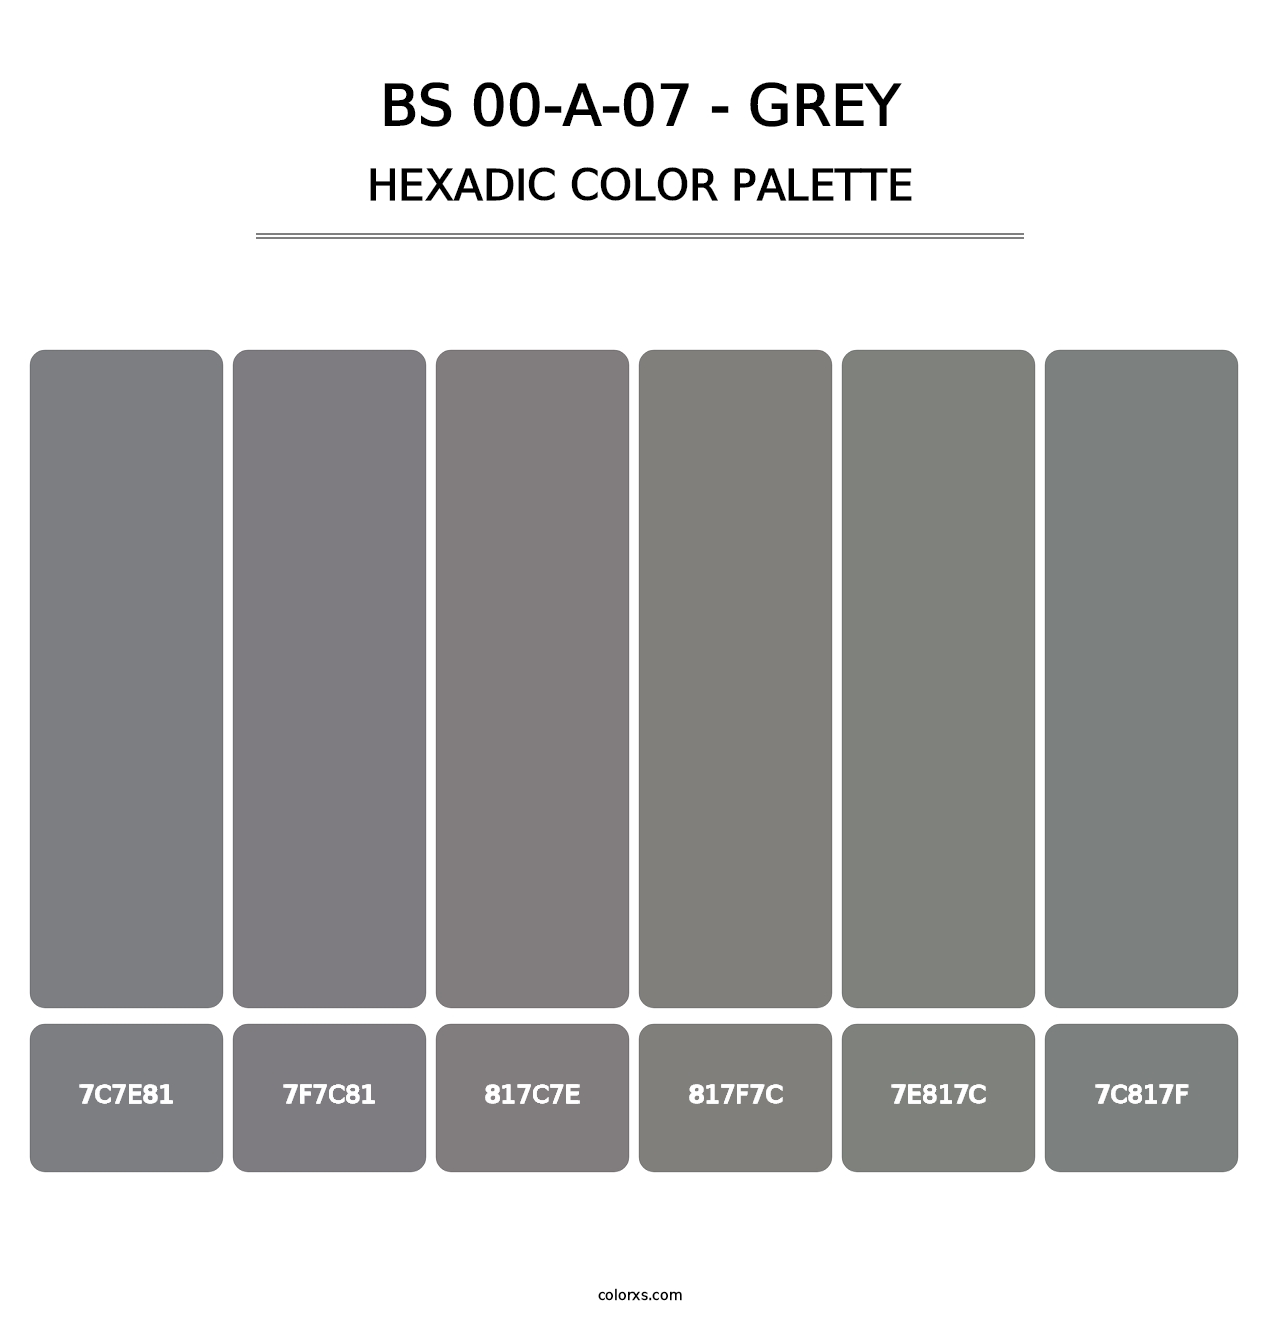 BS 00-A-07 - Grey - Hexadic Color Palette